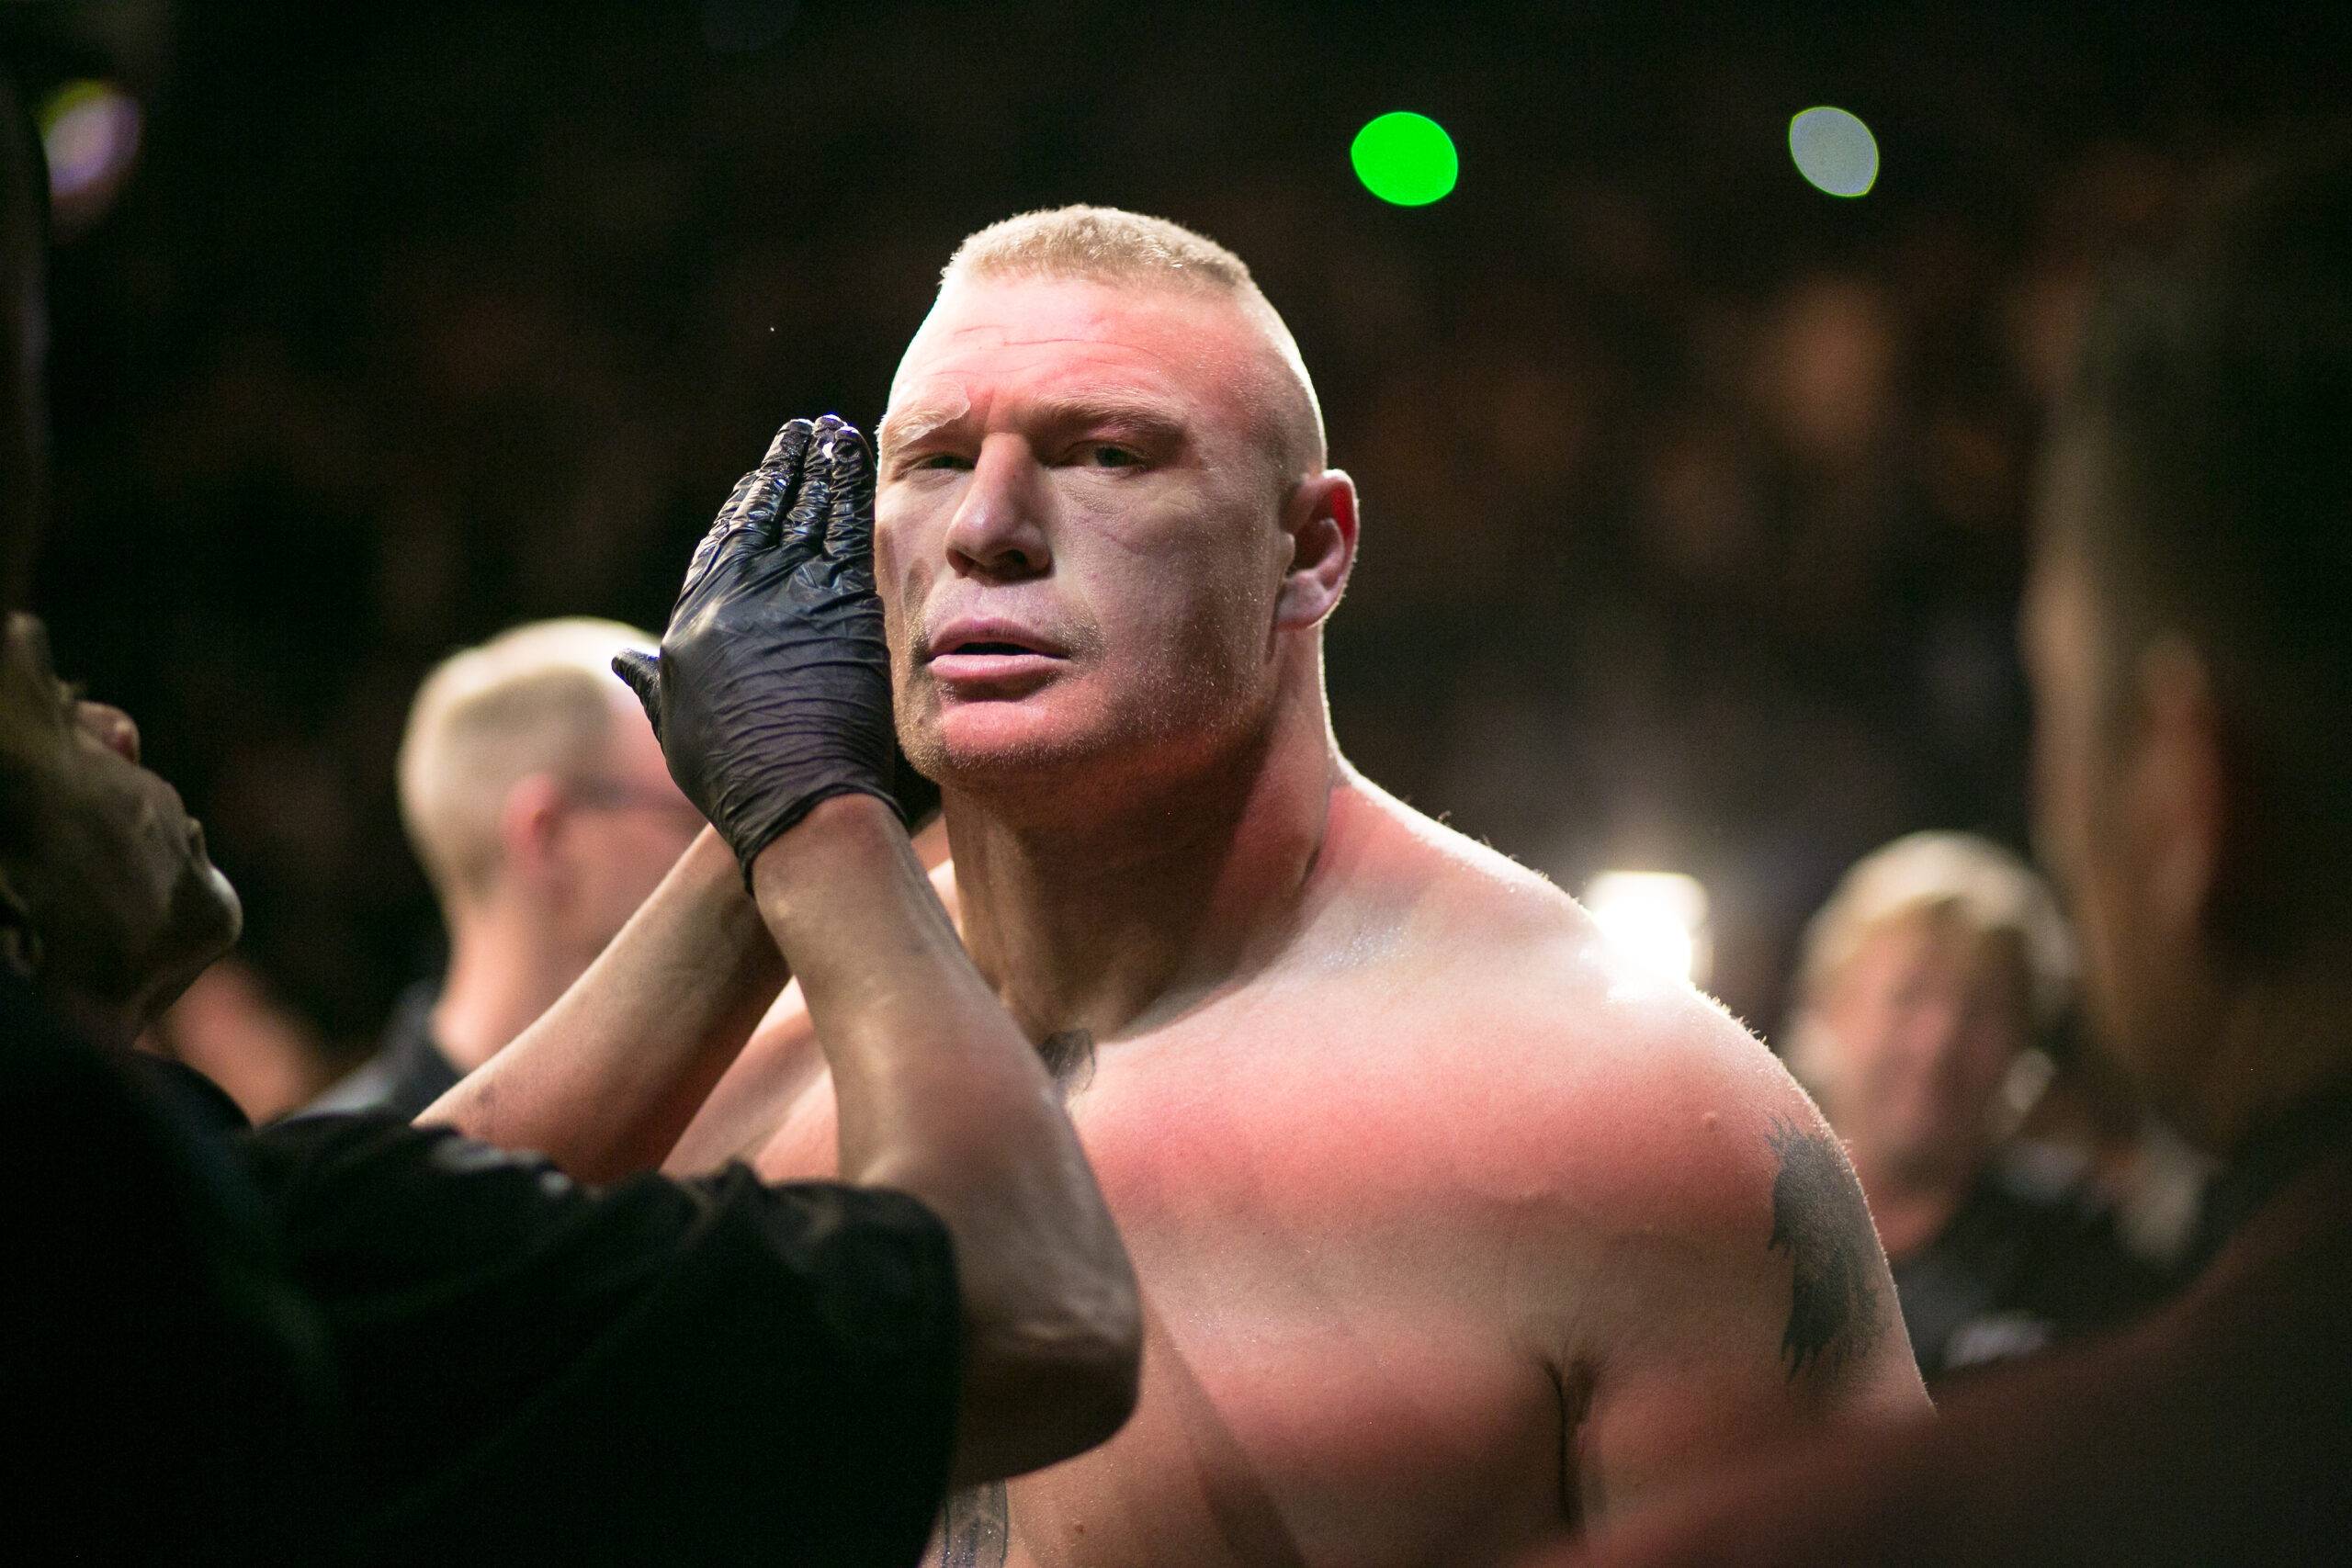 WWE: Brock Lesnar breaks character because of ringside fan's shouting